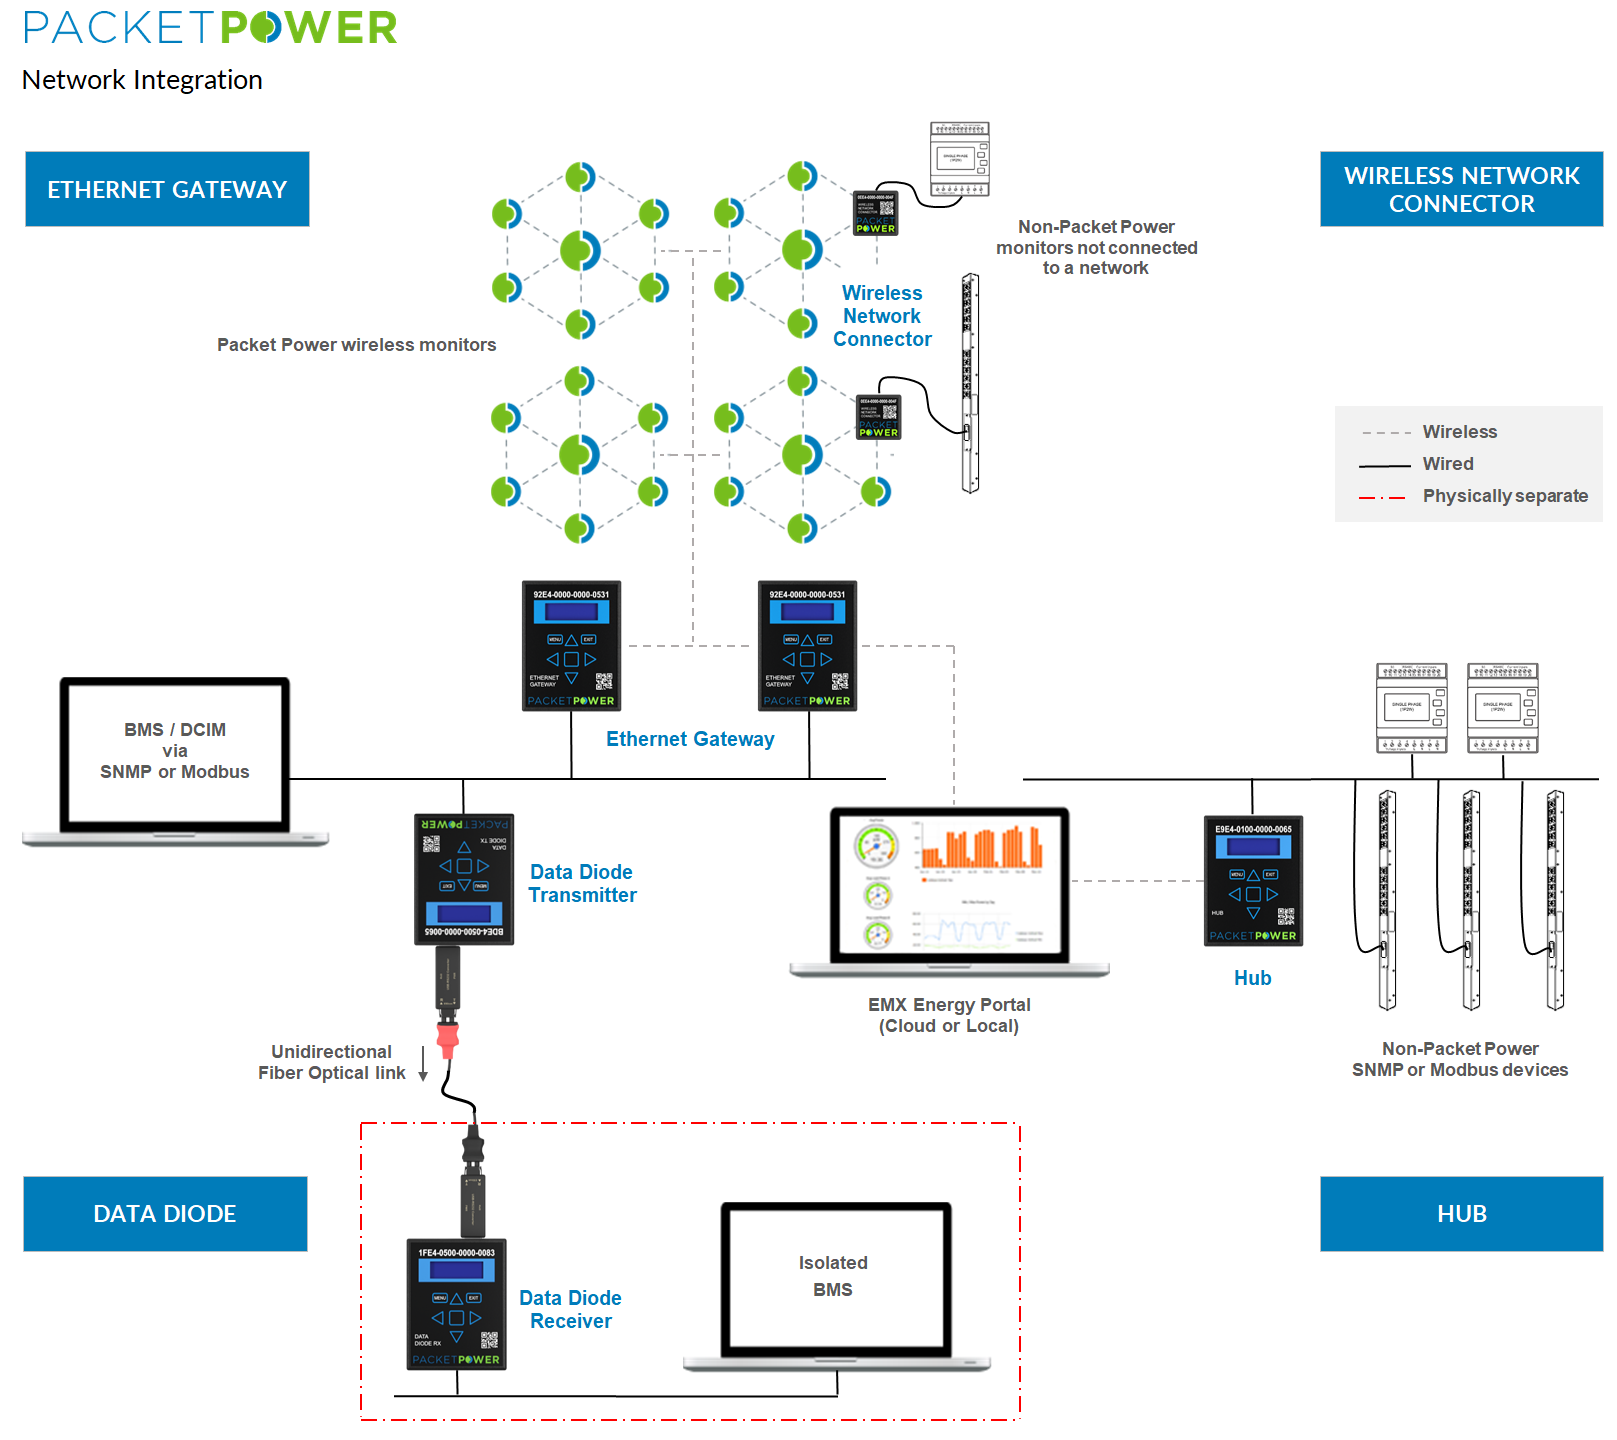 Network Integration overview graphic V2